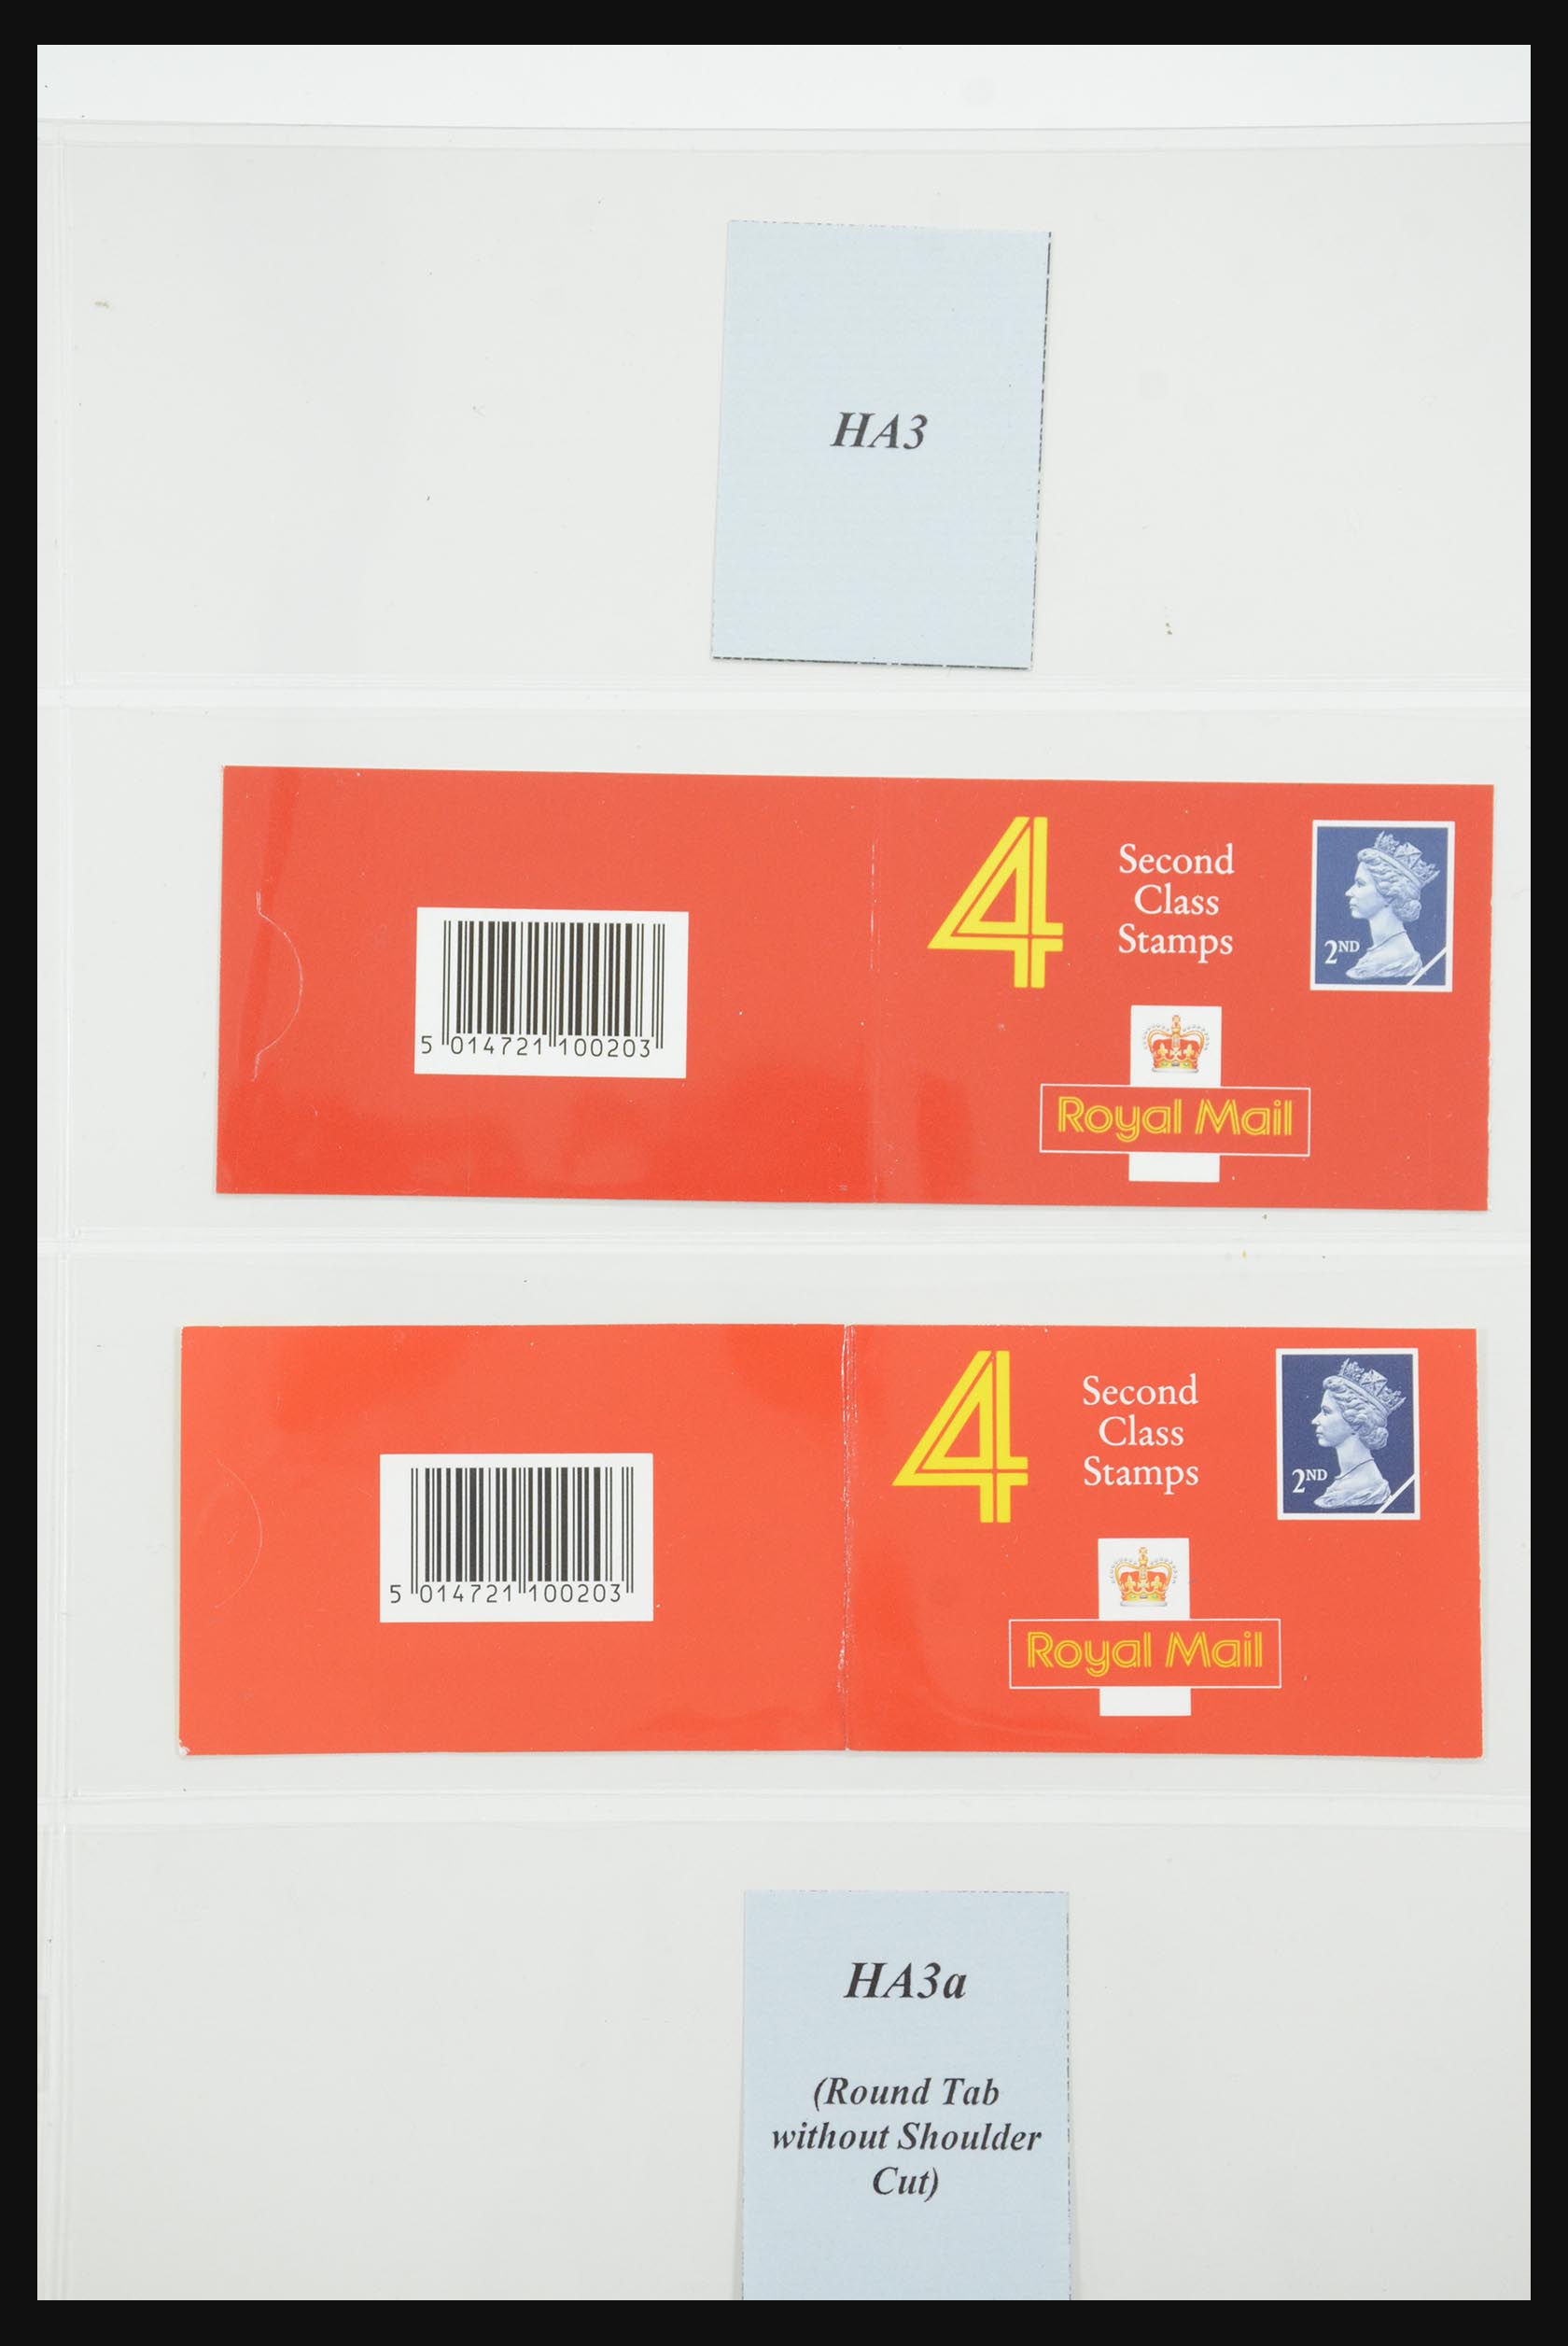 31960 003 - 31960 Great Britain stampbooklets 1989-2000.